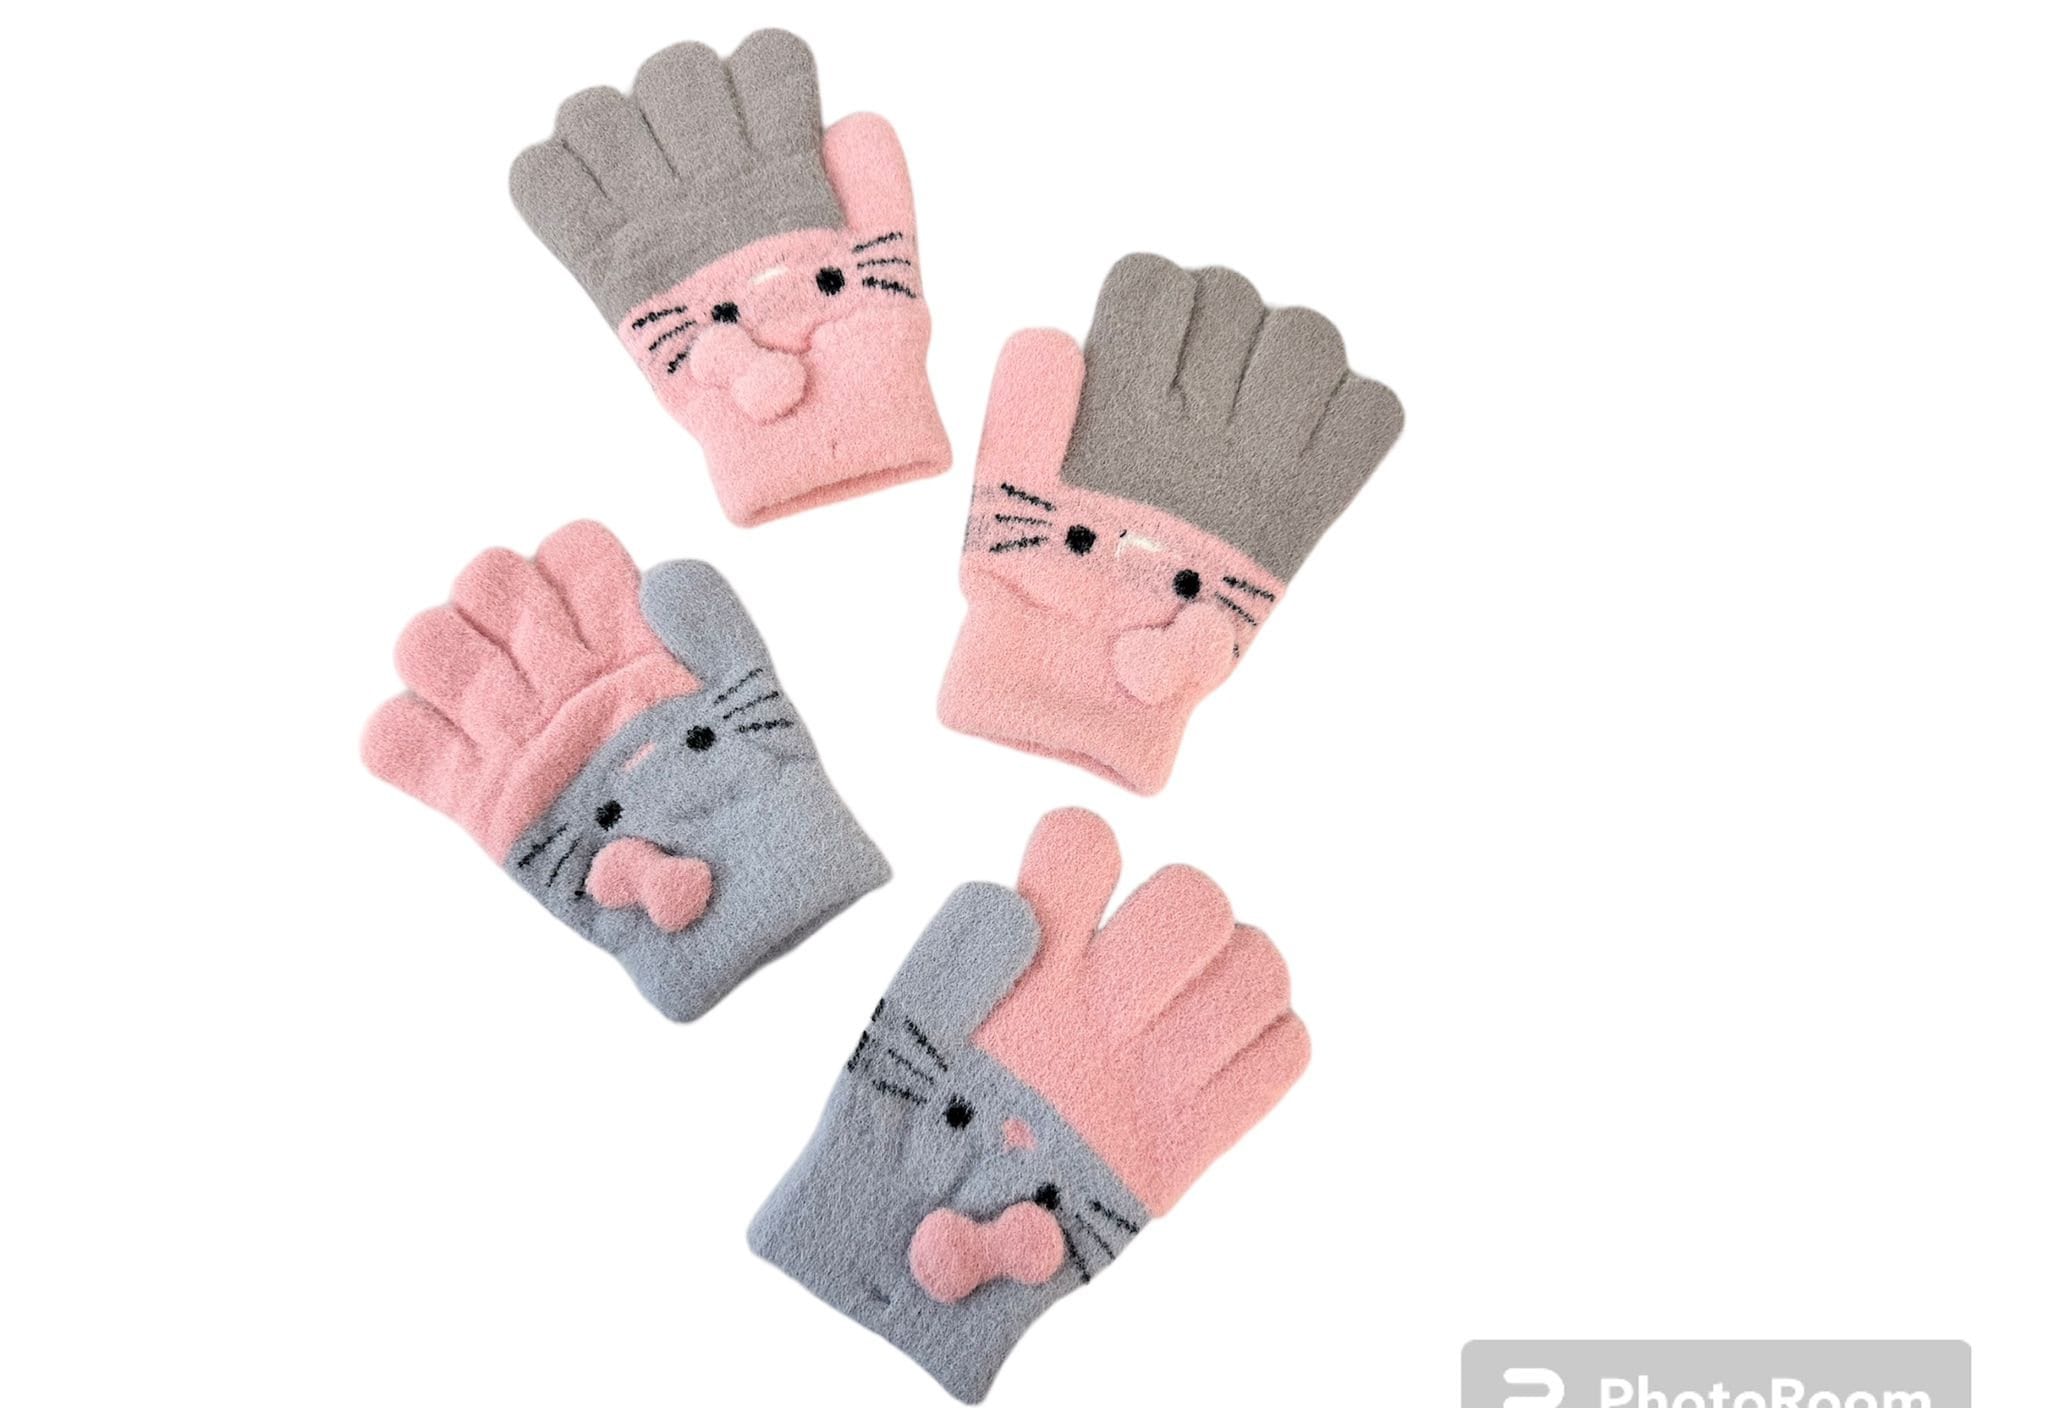 Gloves, Andfall Kids Knit Colorful - Warm Mitten, Accessories, Winter Glove Gloves, Kids Winter Etsy Fleece Soft Bunny Design Kids Lined Boys/girls